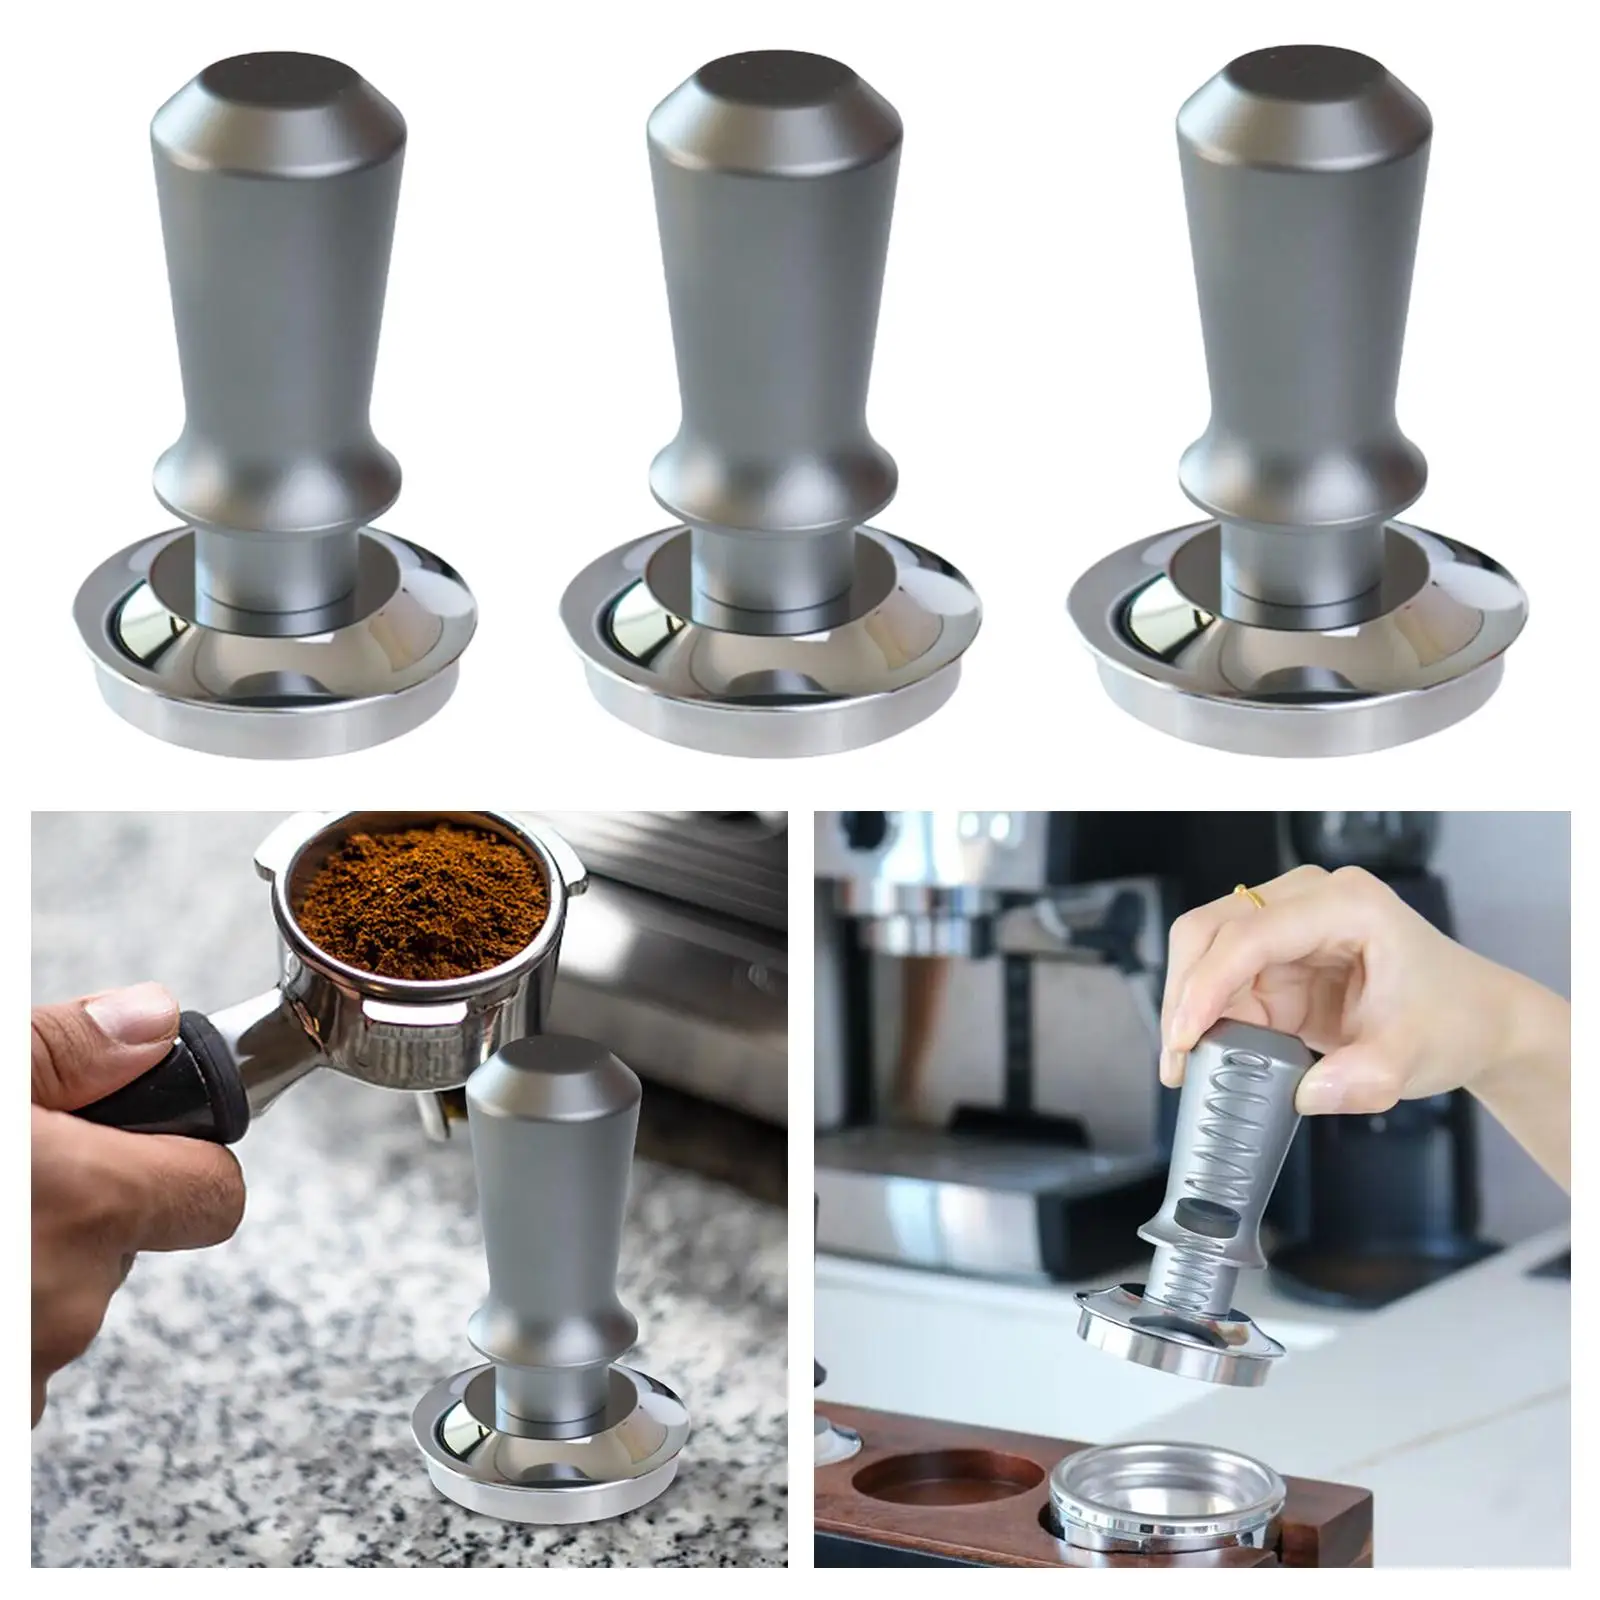 Dual Spring Loaded Tamper Espresso Machine Accessories Espresso Tamper for Espresso Machines Restaurants Coffee